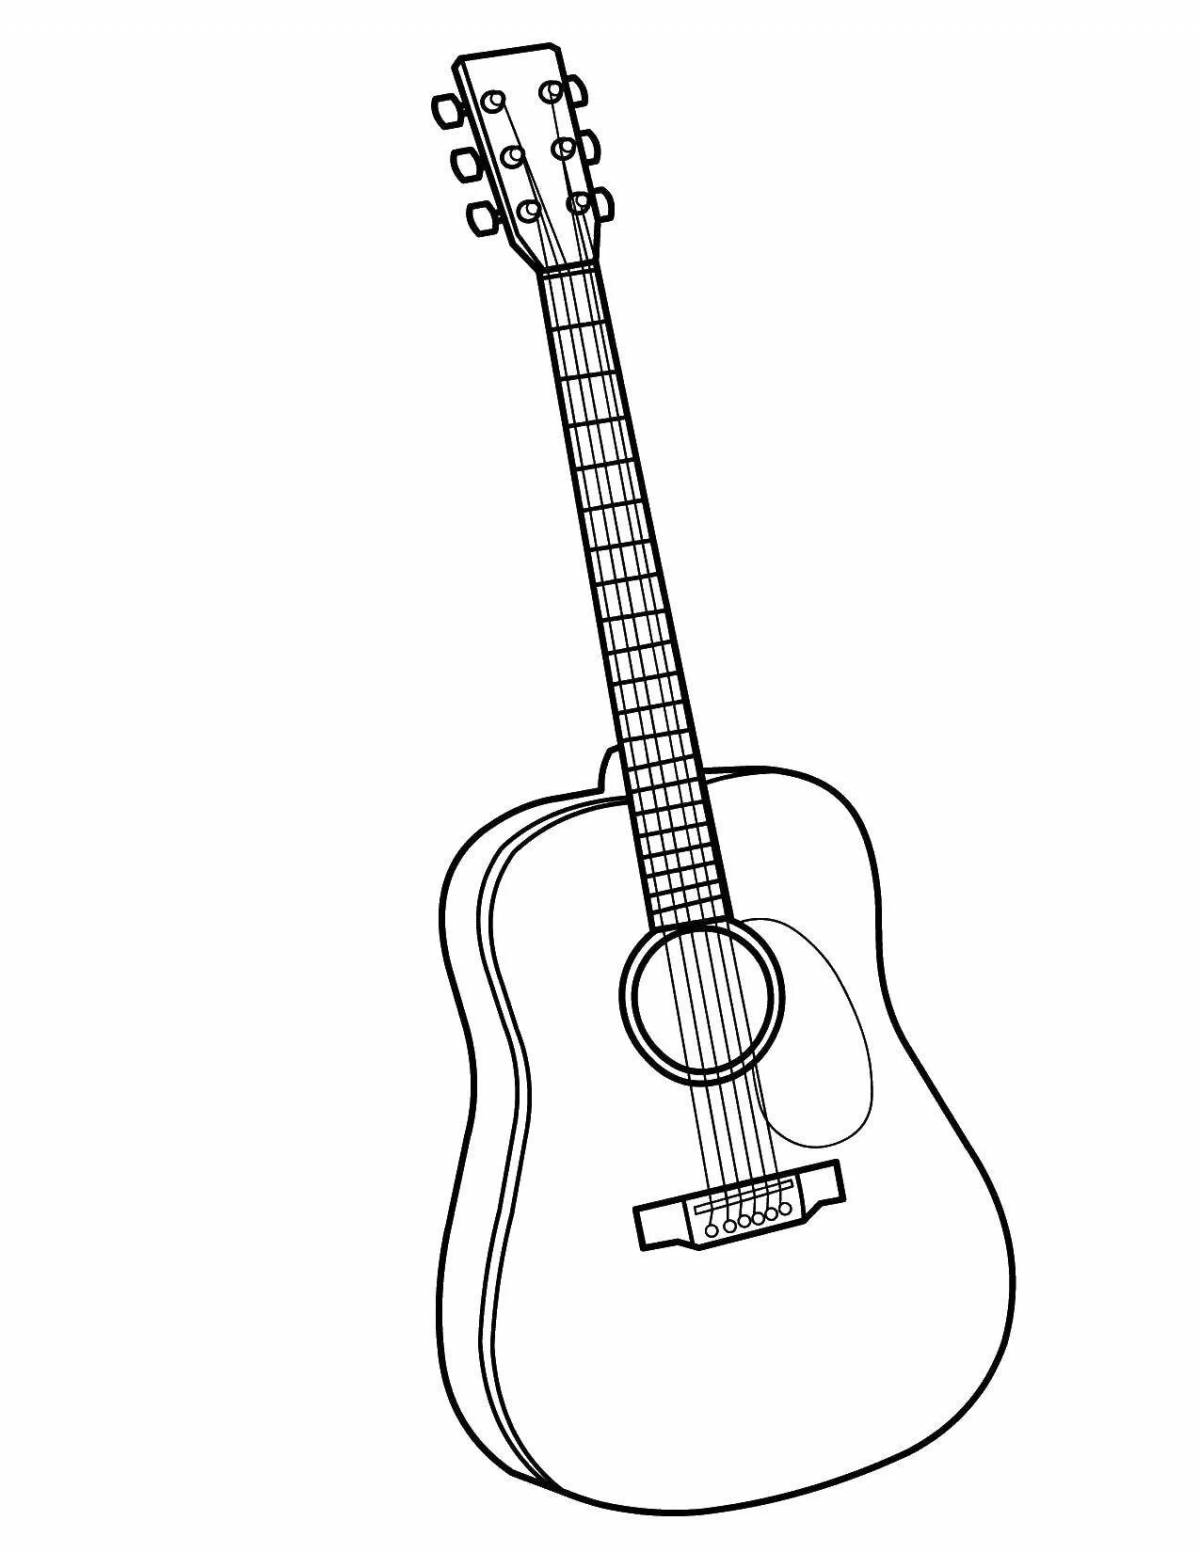 Раскраска гитары (страница 1) - Ремонт гитар